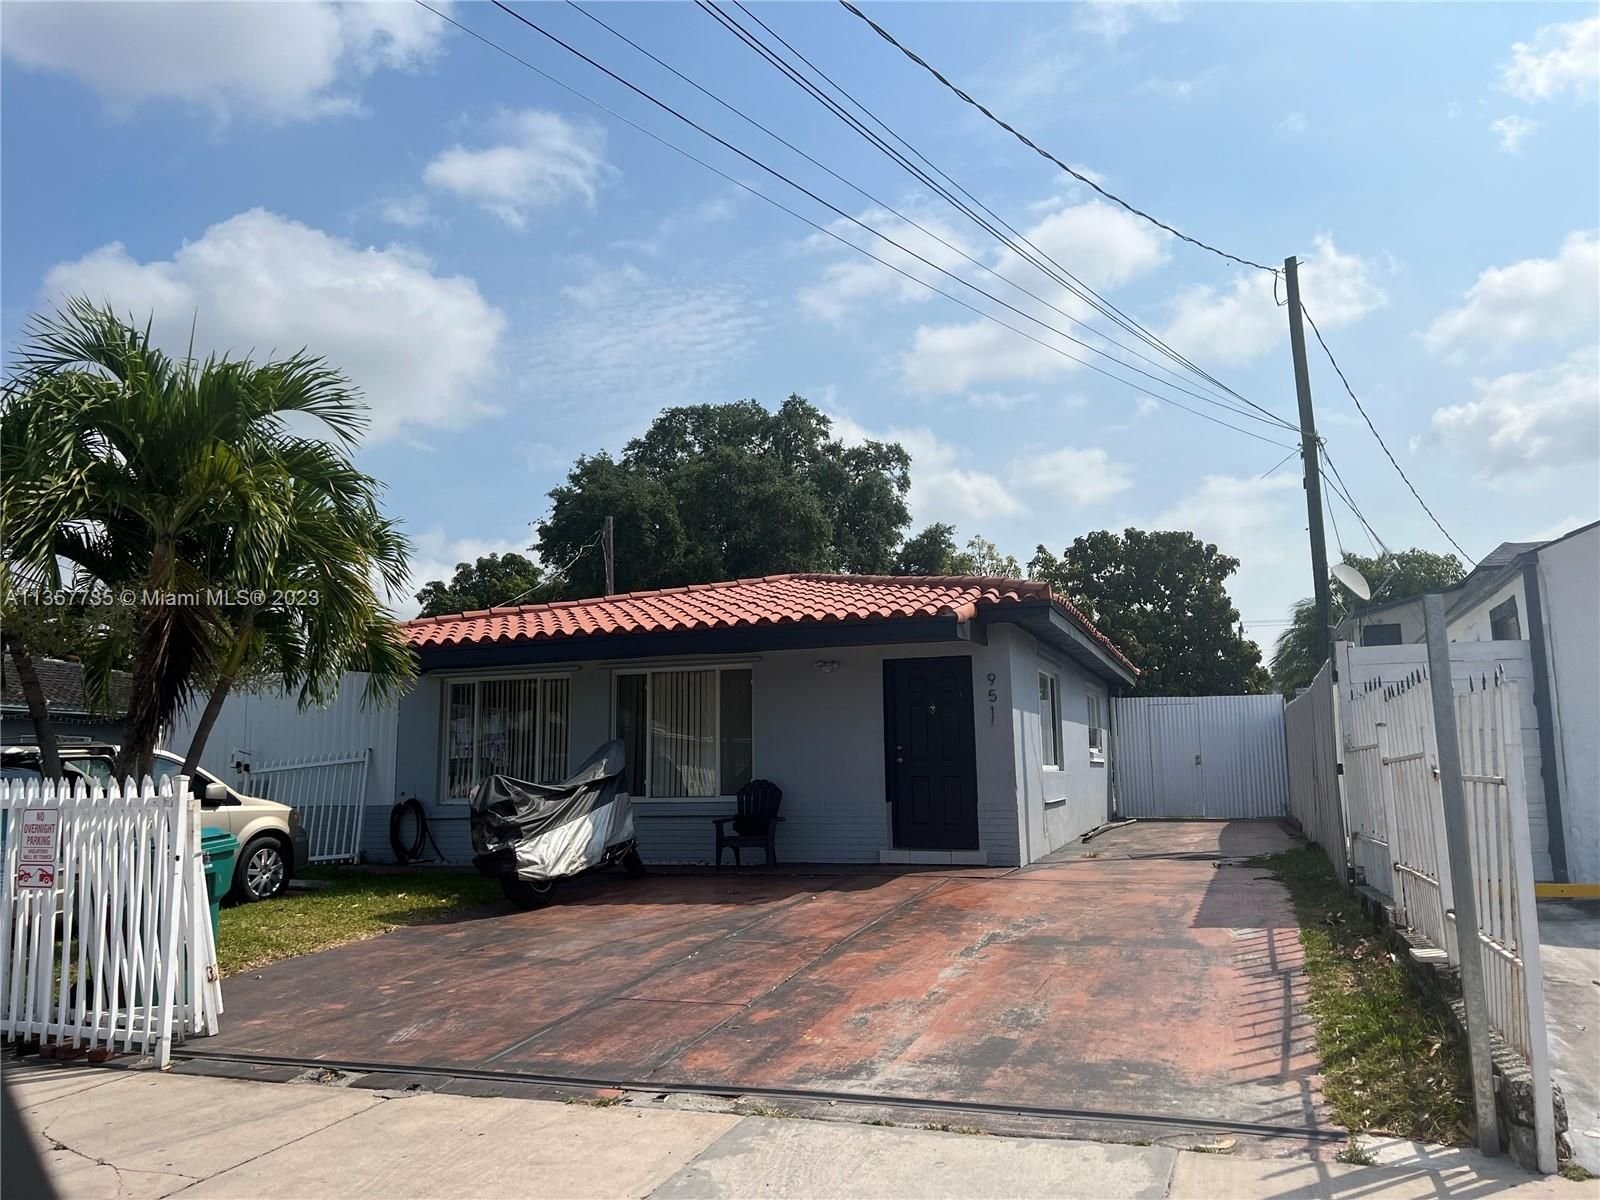 Real estate property located at 951 26th Ave, Miami-Dade County, Miami, FL